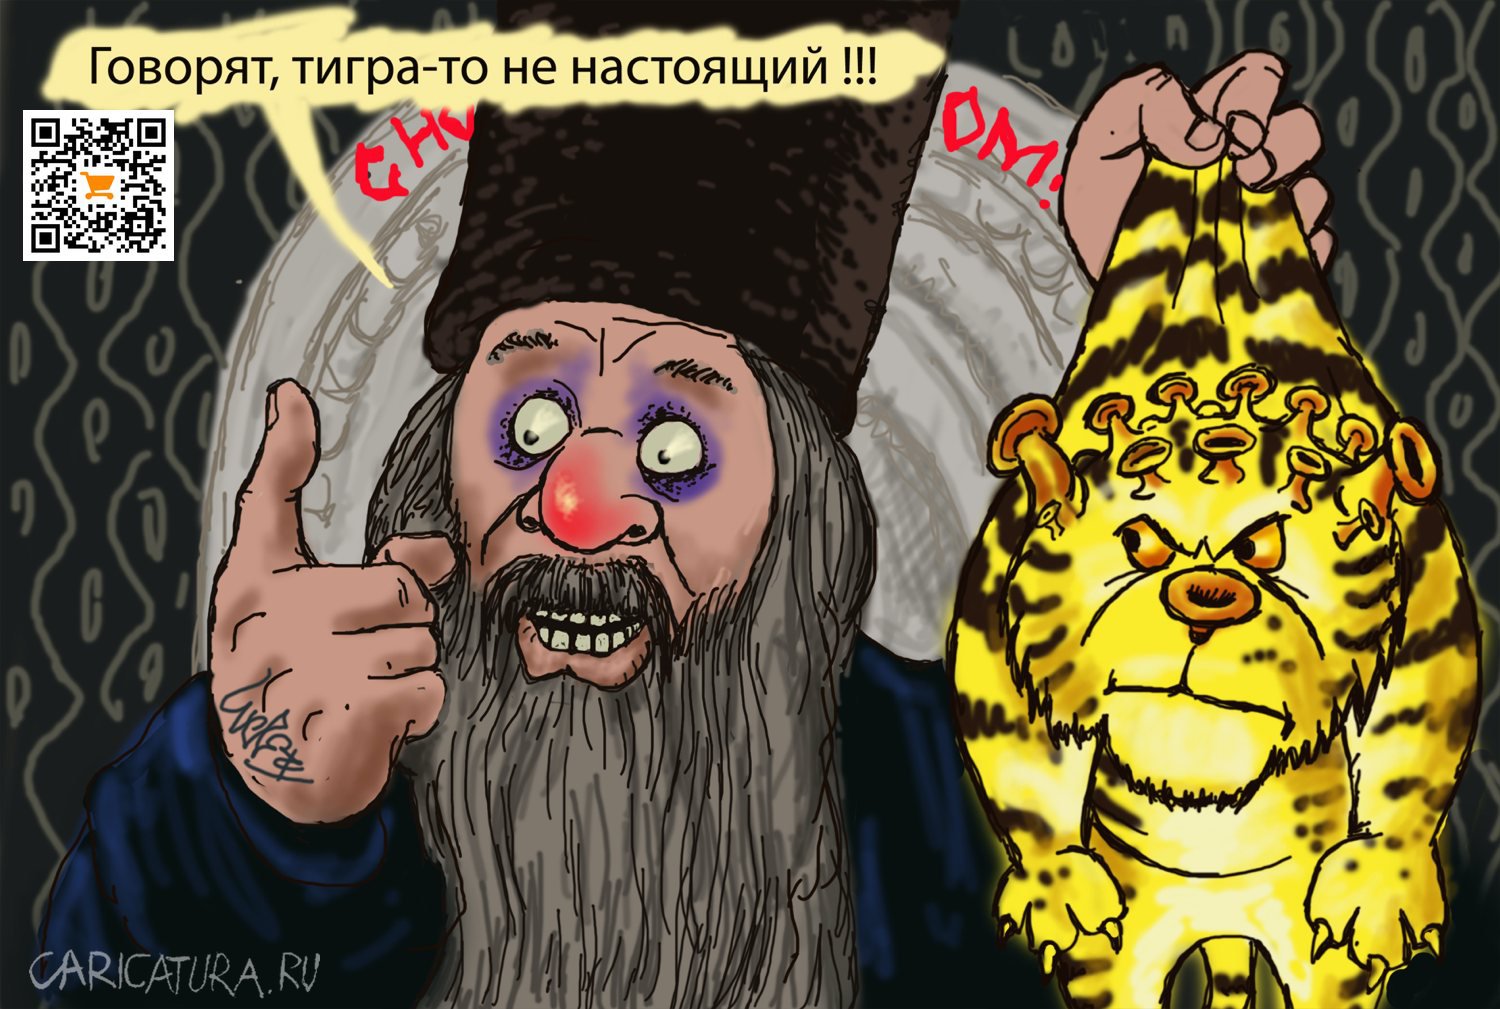 Карикатура "Нас не проведешь!", Алек Геворгян